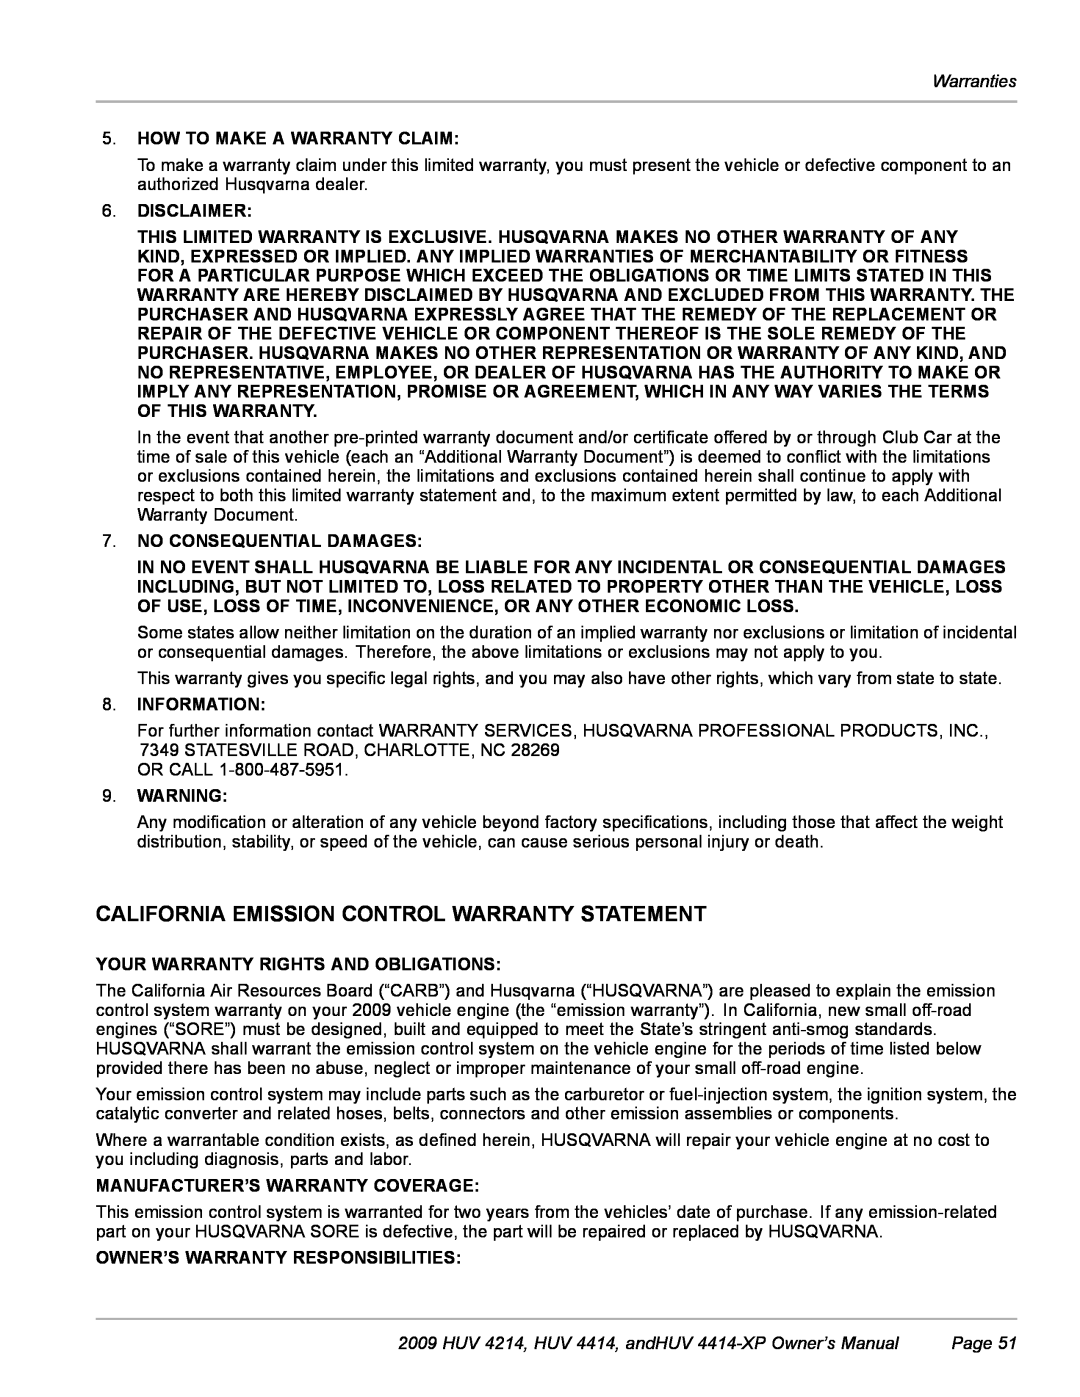 Husqvarna HUV 4414-XP, HUV 4214 owner manual California Emission Control Warranty Statement, Warranties, Page 